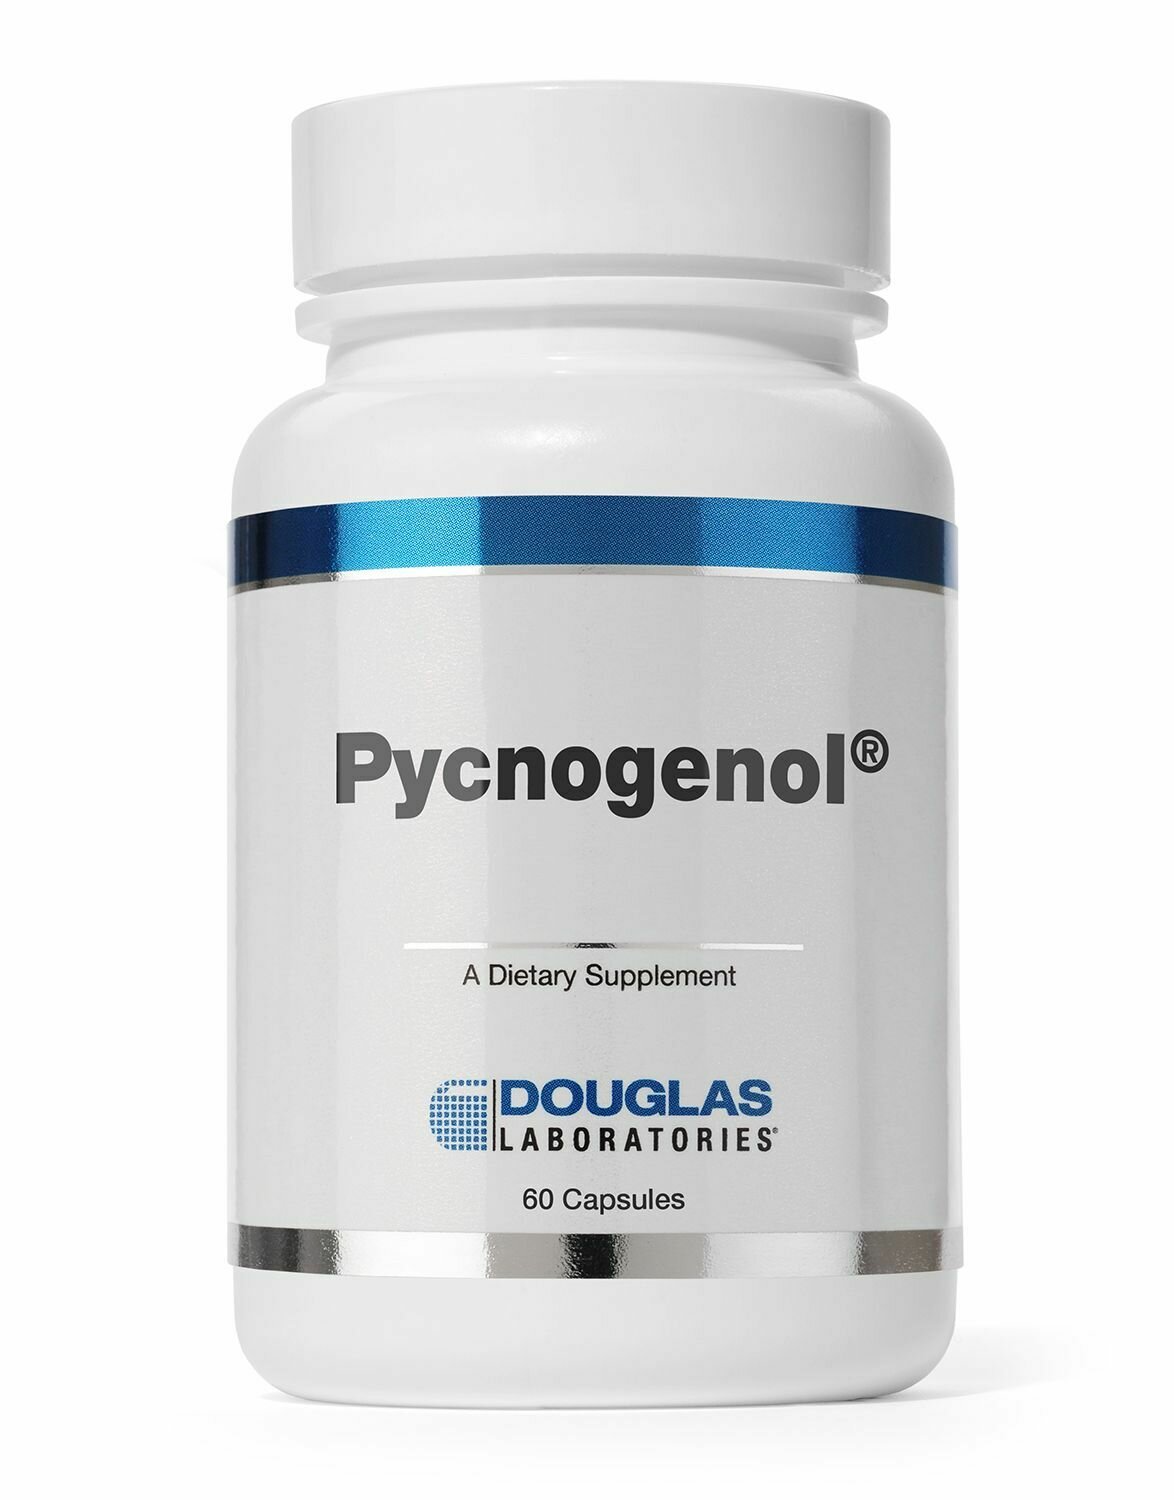 Pycnogenol ® (25 mg capsules)